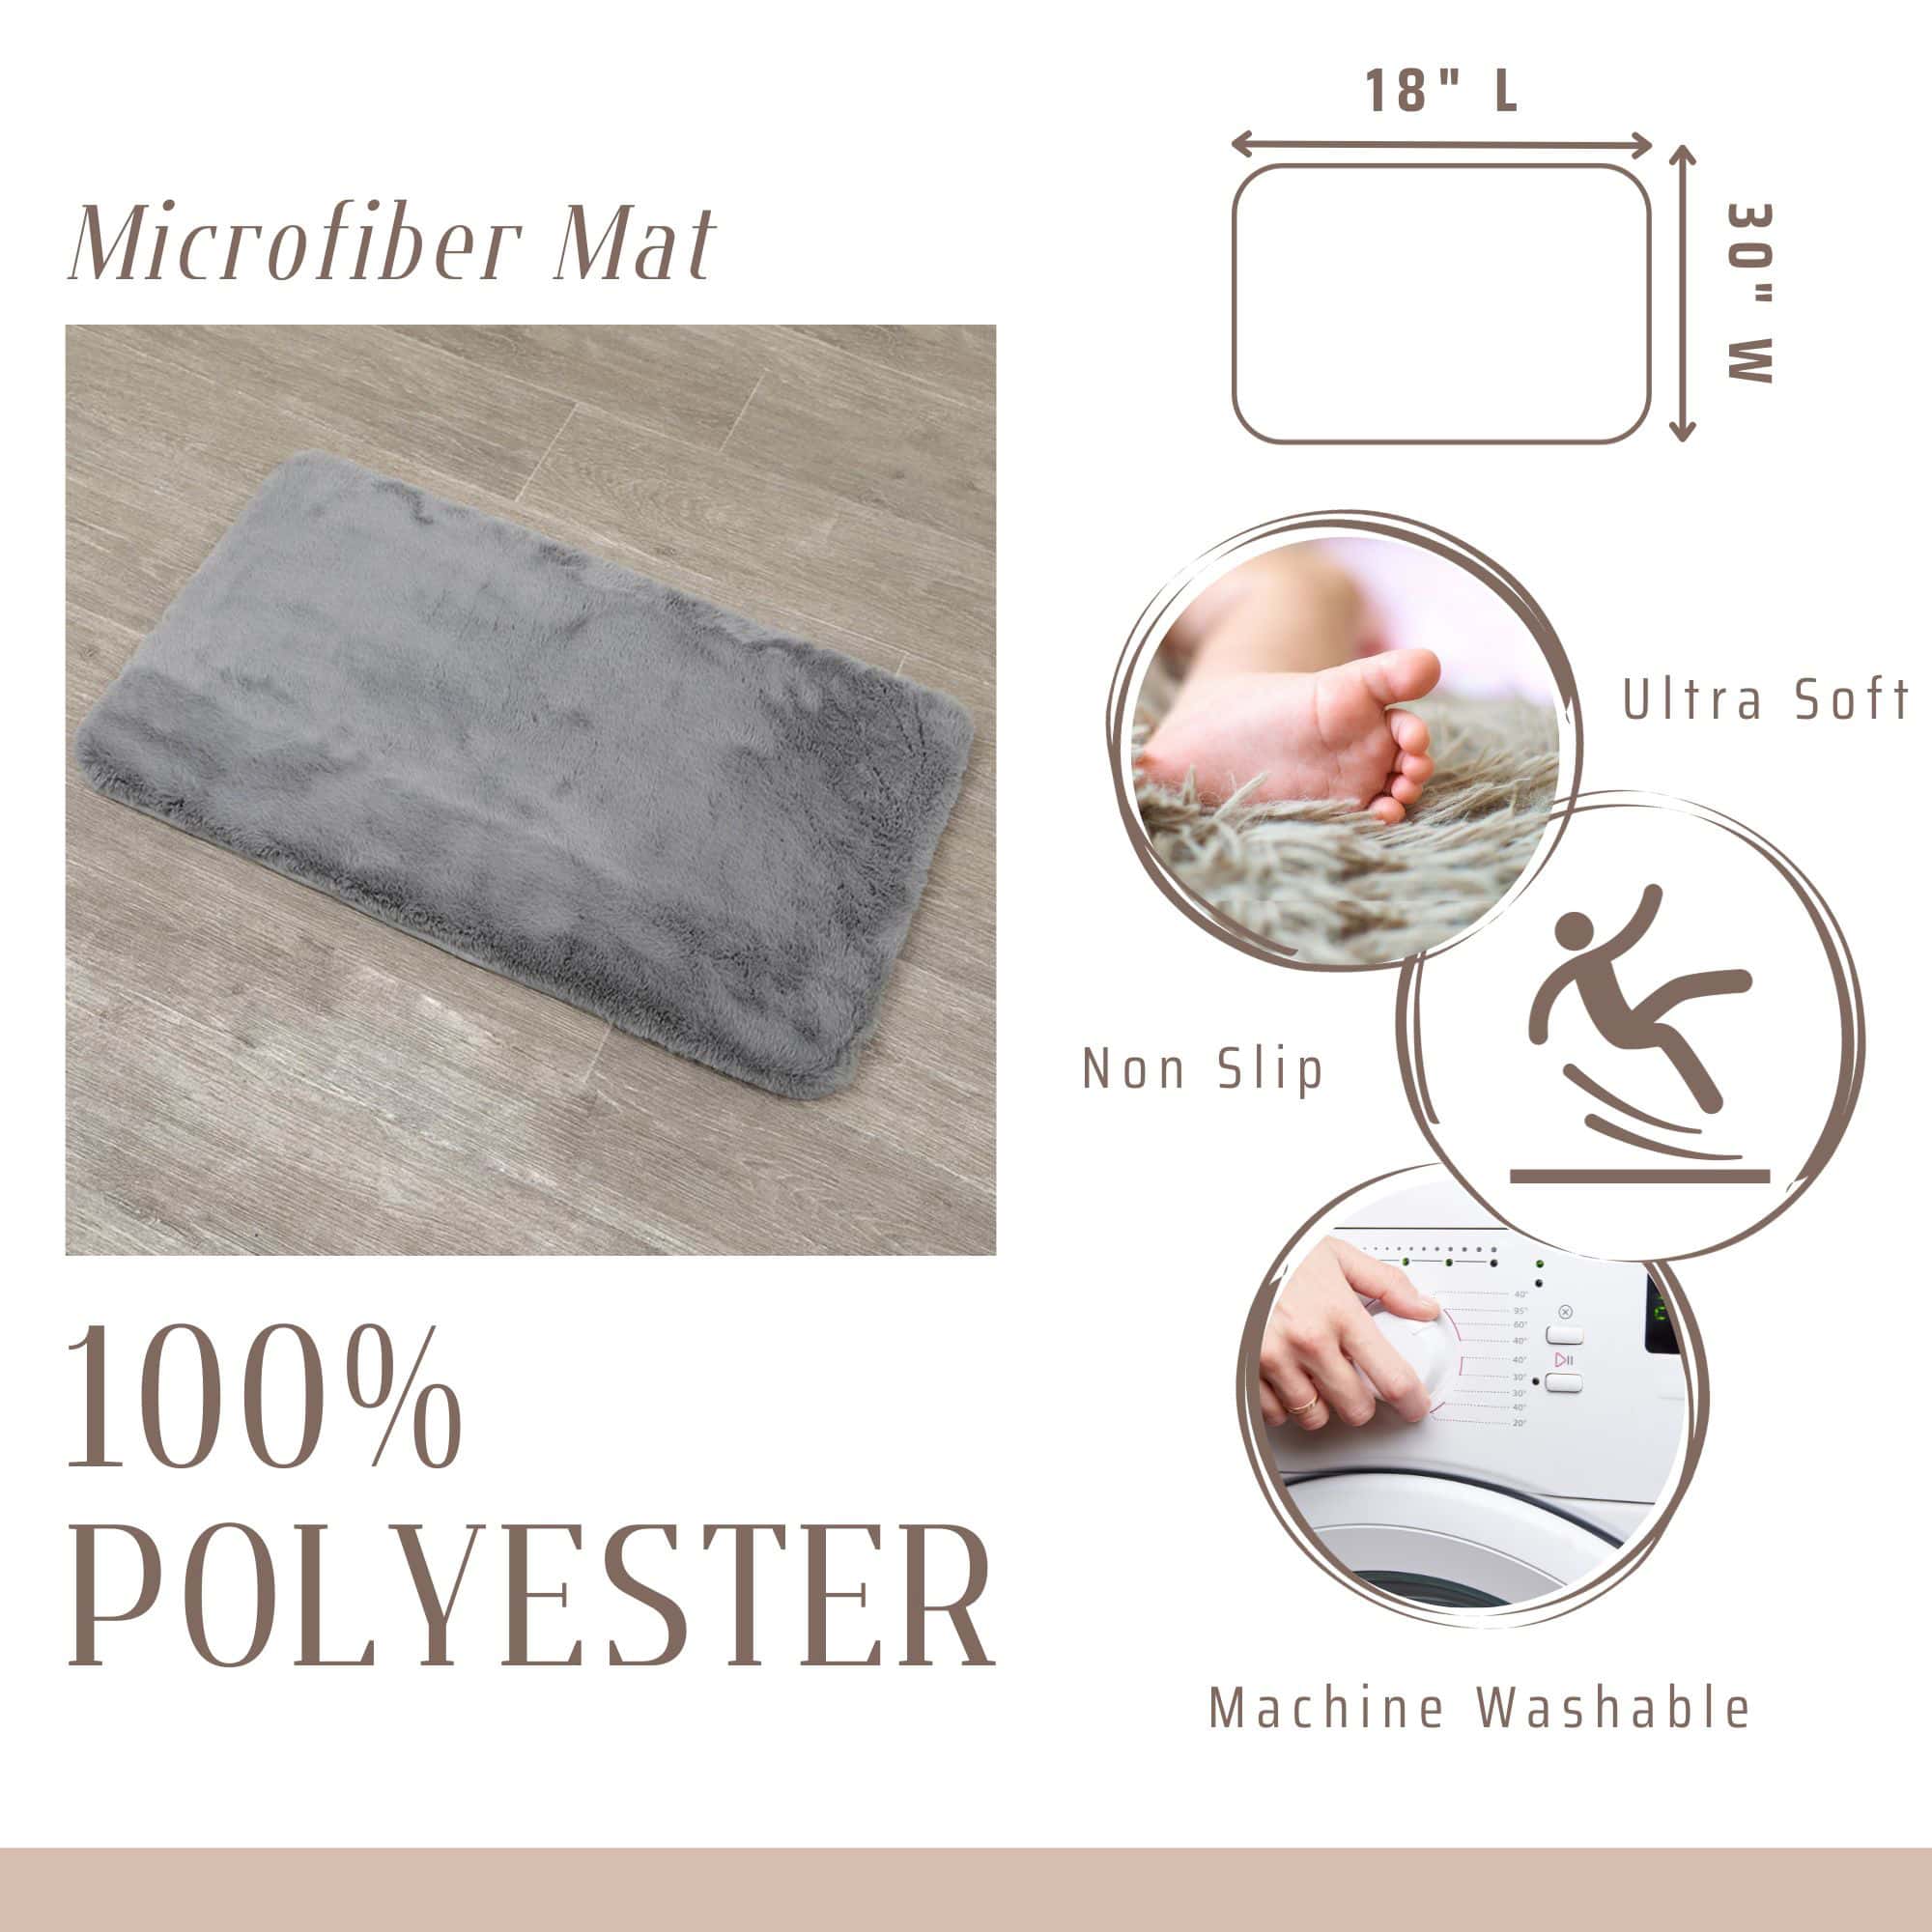 anti-slip microfober mat for bathroom and bedroom